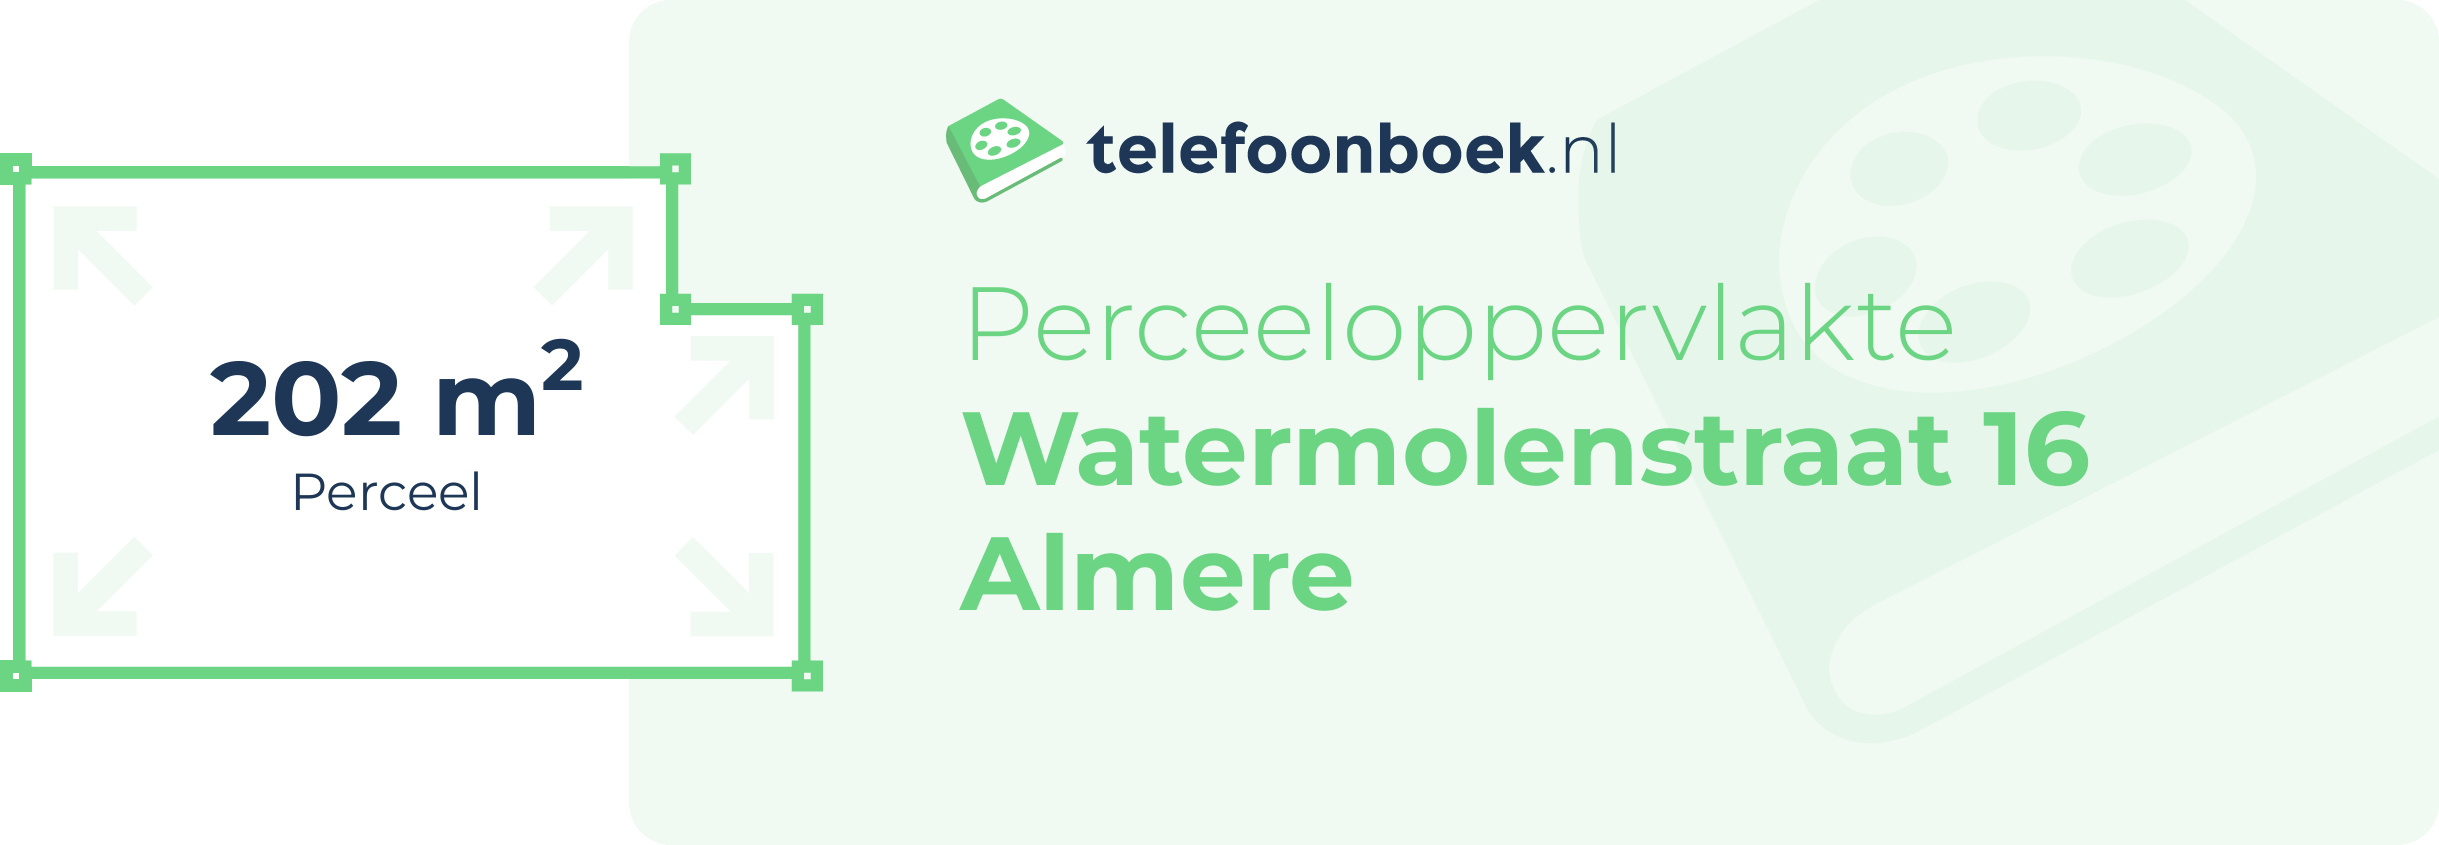 Perceeloppervlakte Watermolenstraat 16 Almere